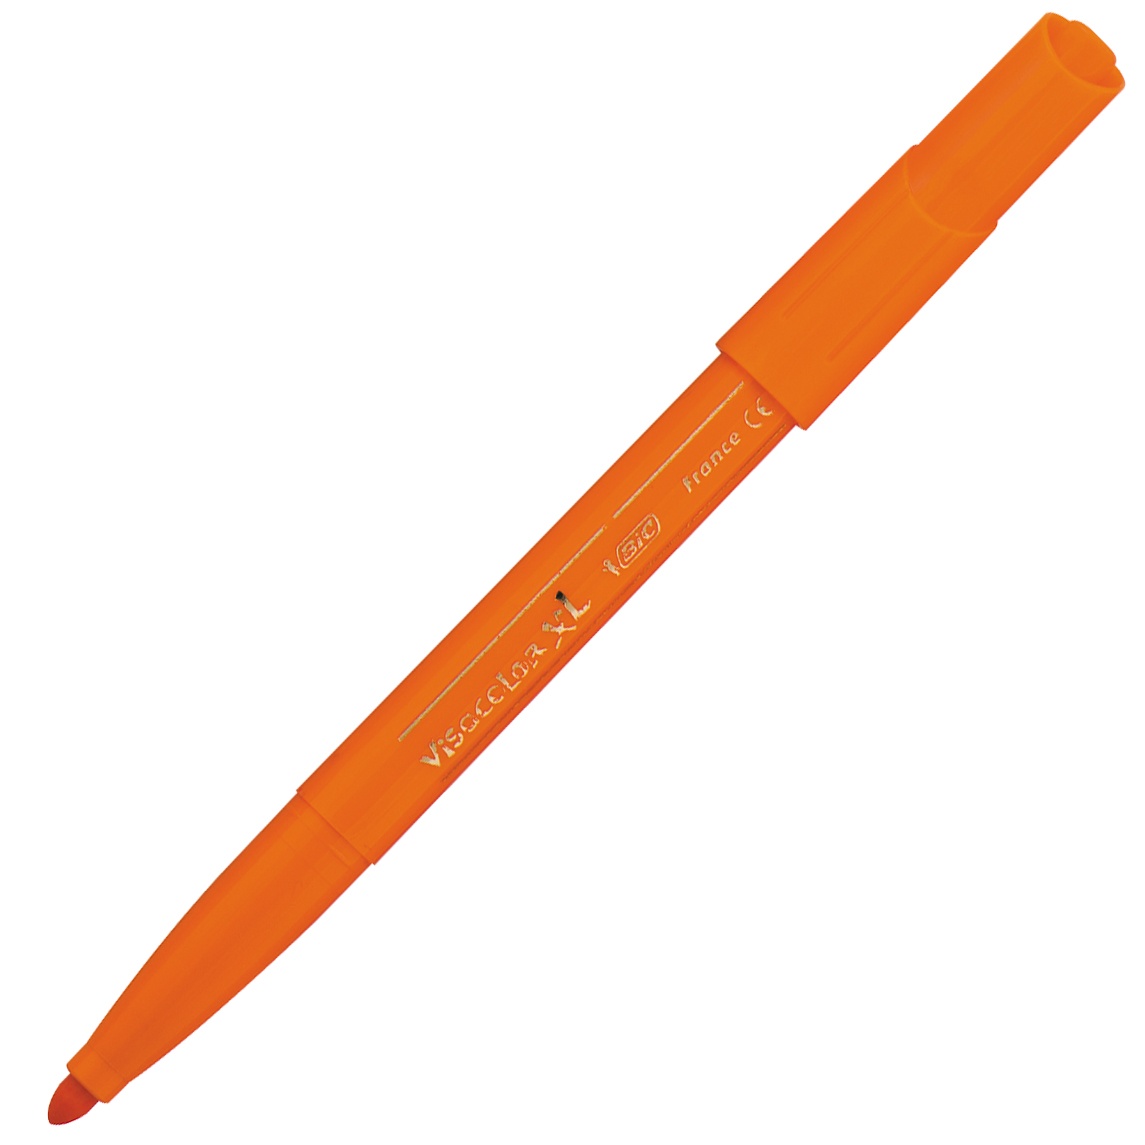 Kids Visacolor XL Fiber-tip pens 24-set in the group Kids / Kids' Pens / 3 Years+ at Pen Store (100250)